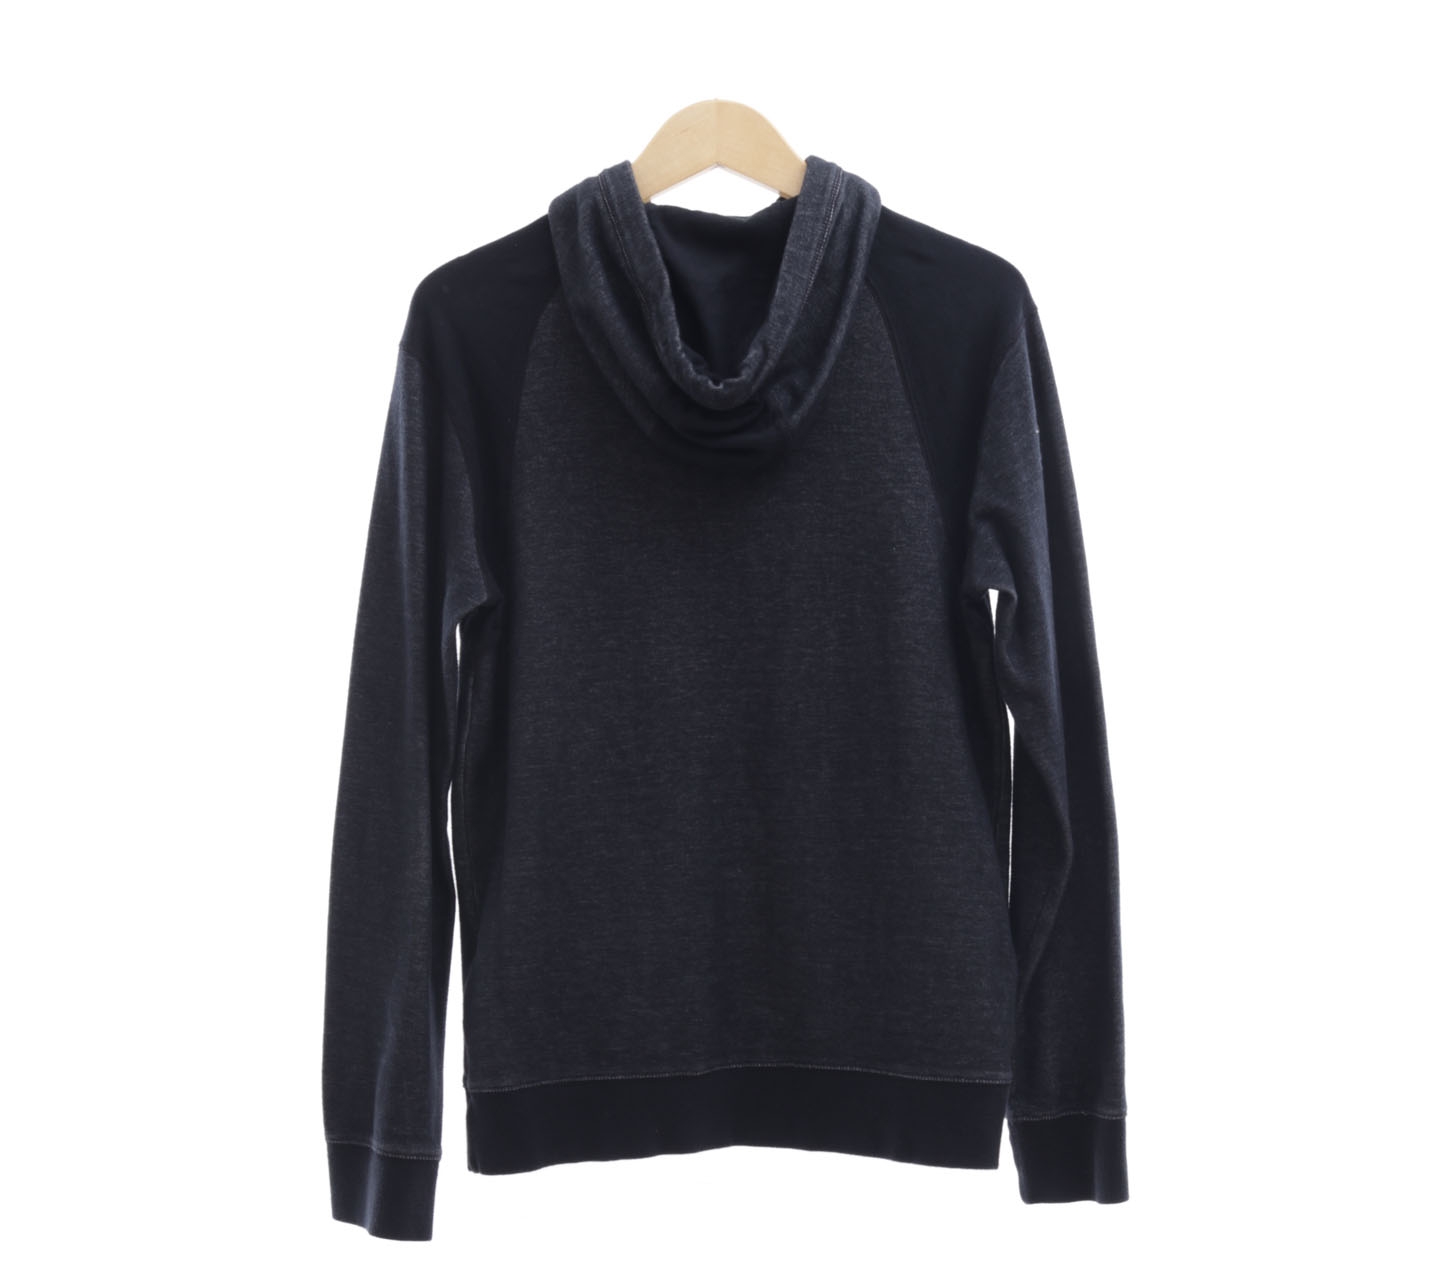 Rock & Republic Dark Grey Hoodie Sweater